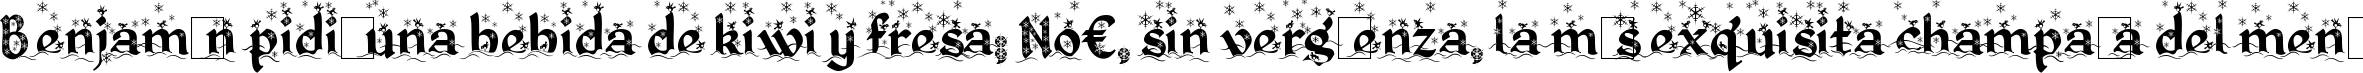 Пример написания шрифтом Kingthings Christmas текста на испанском